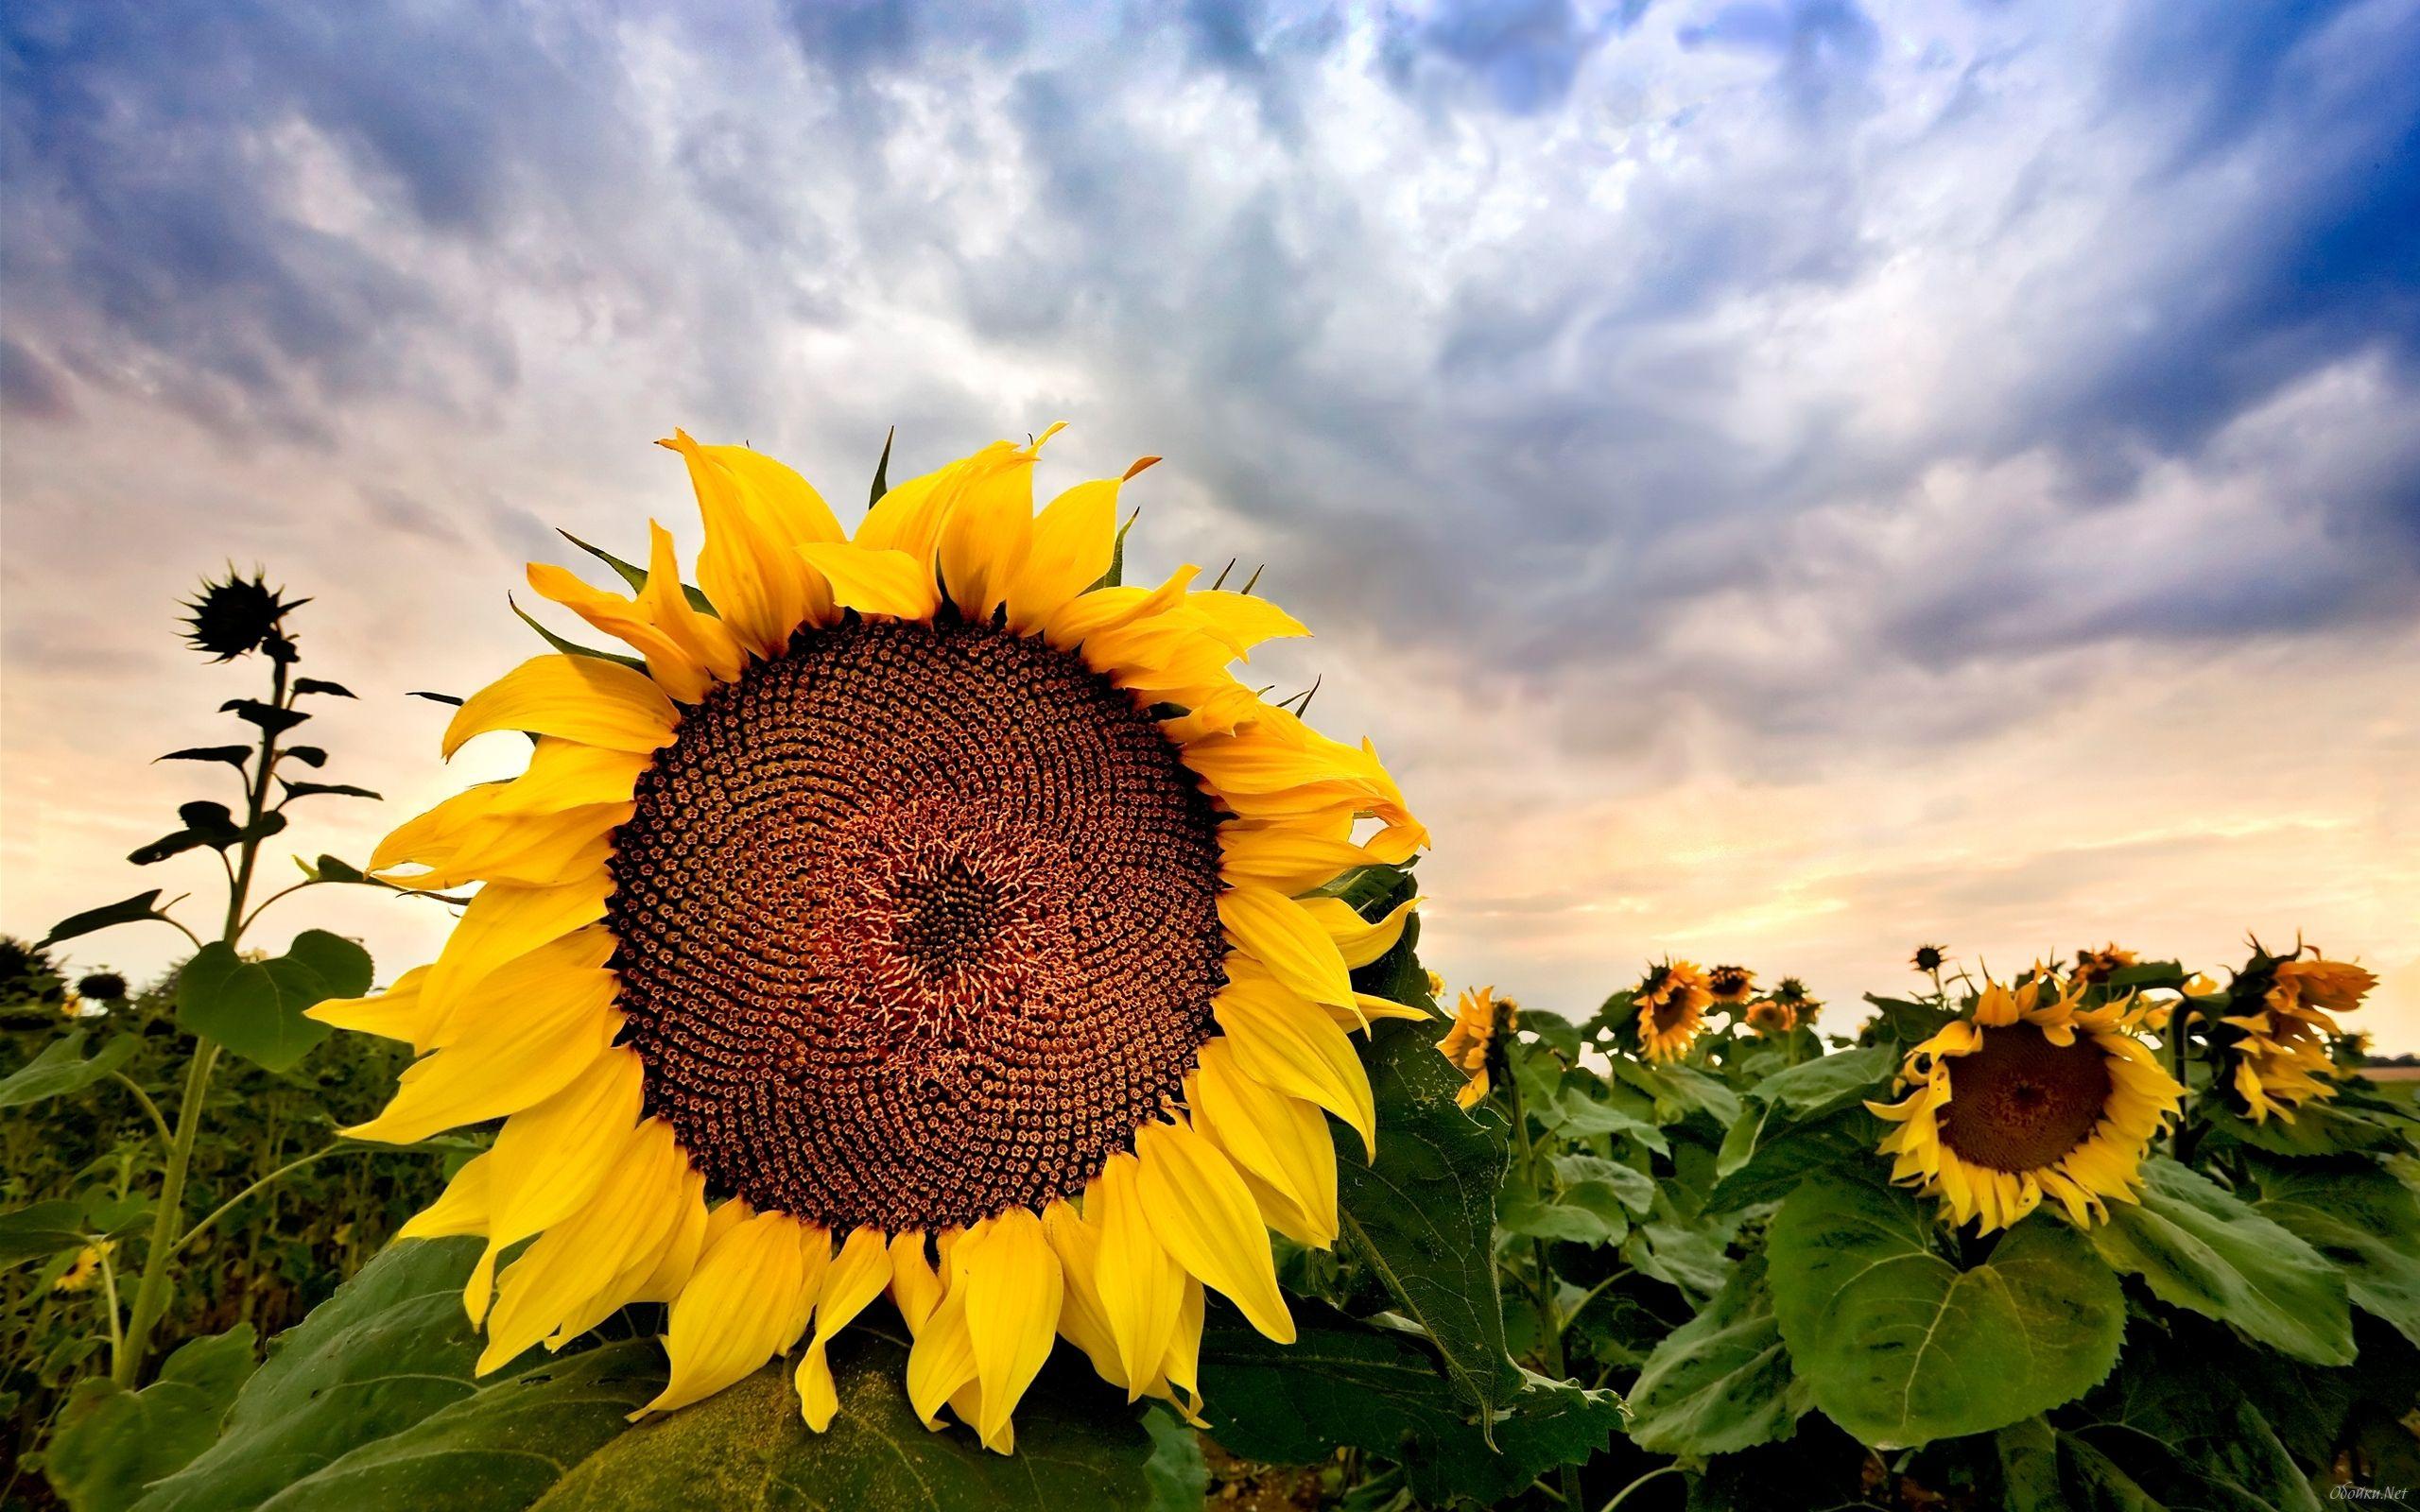 Field of sunflowers, wallpaper with nature. HD Desktop Wallpaper